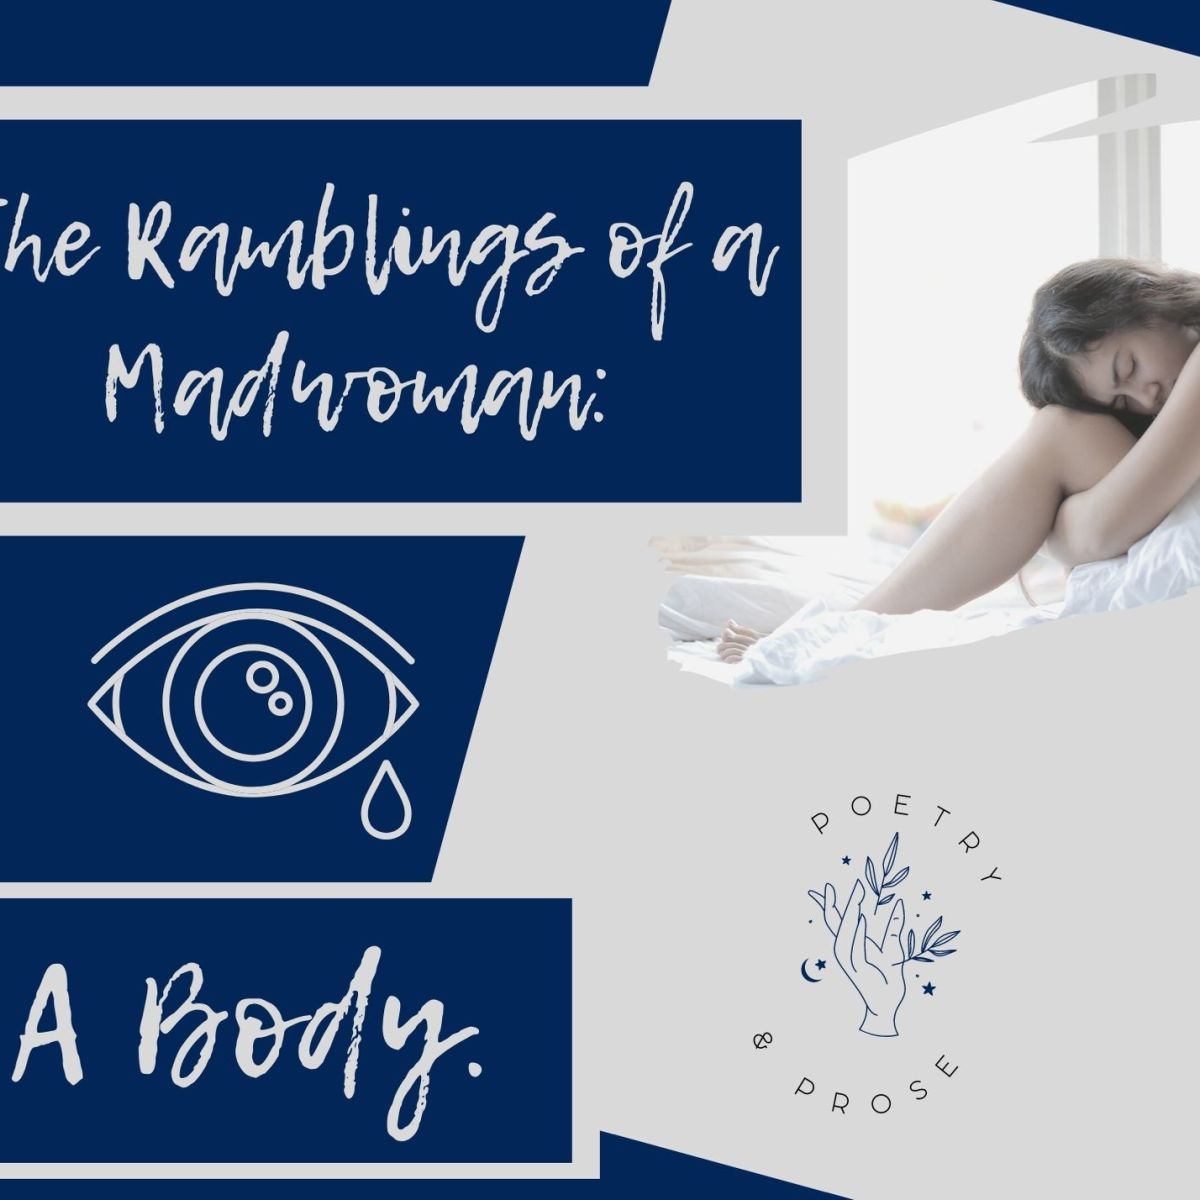 The Ramblings of a Madwoman: A Body.